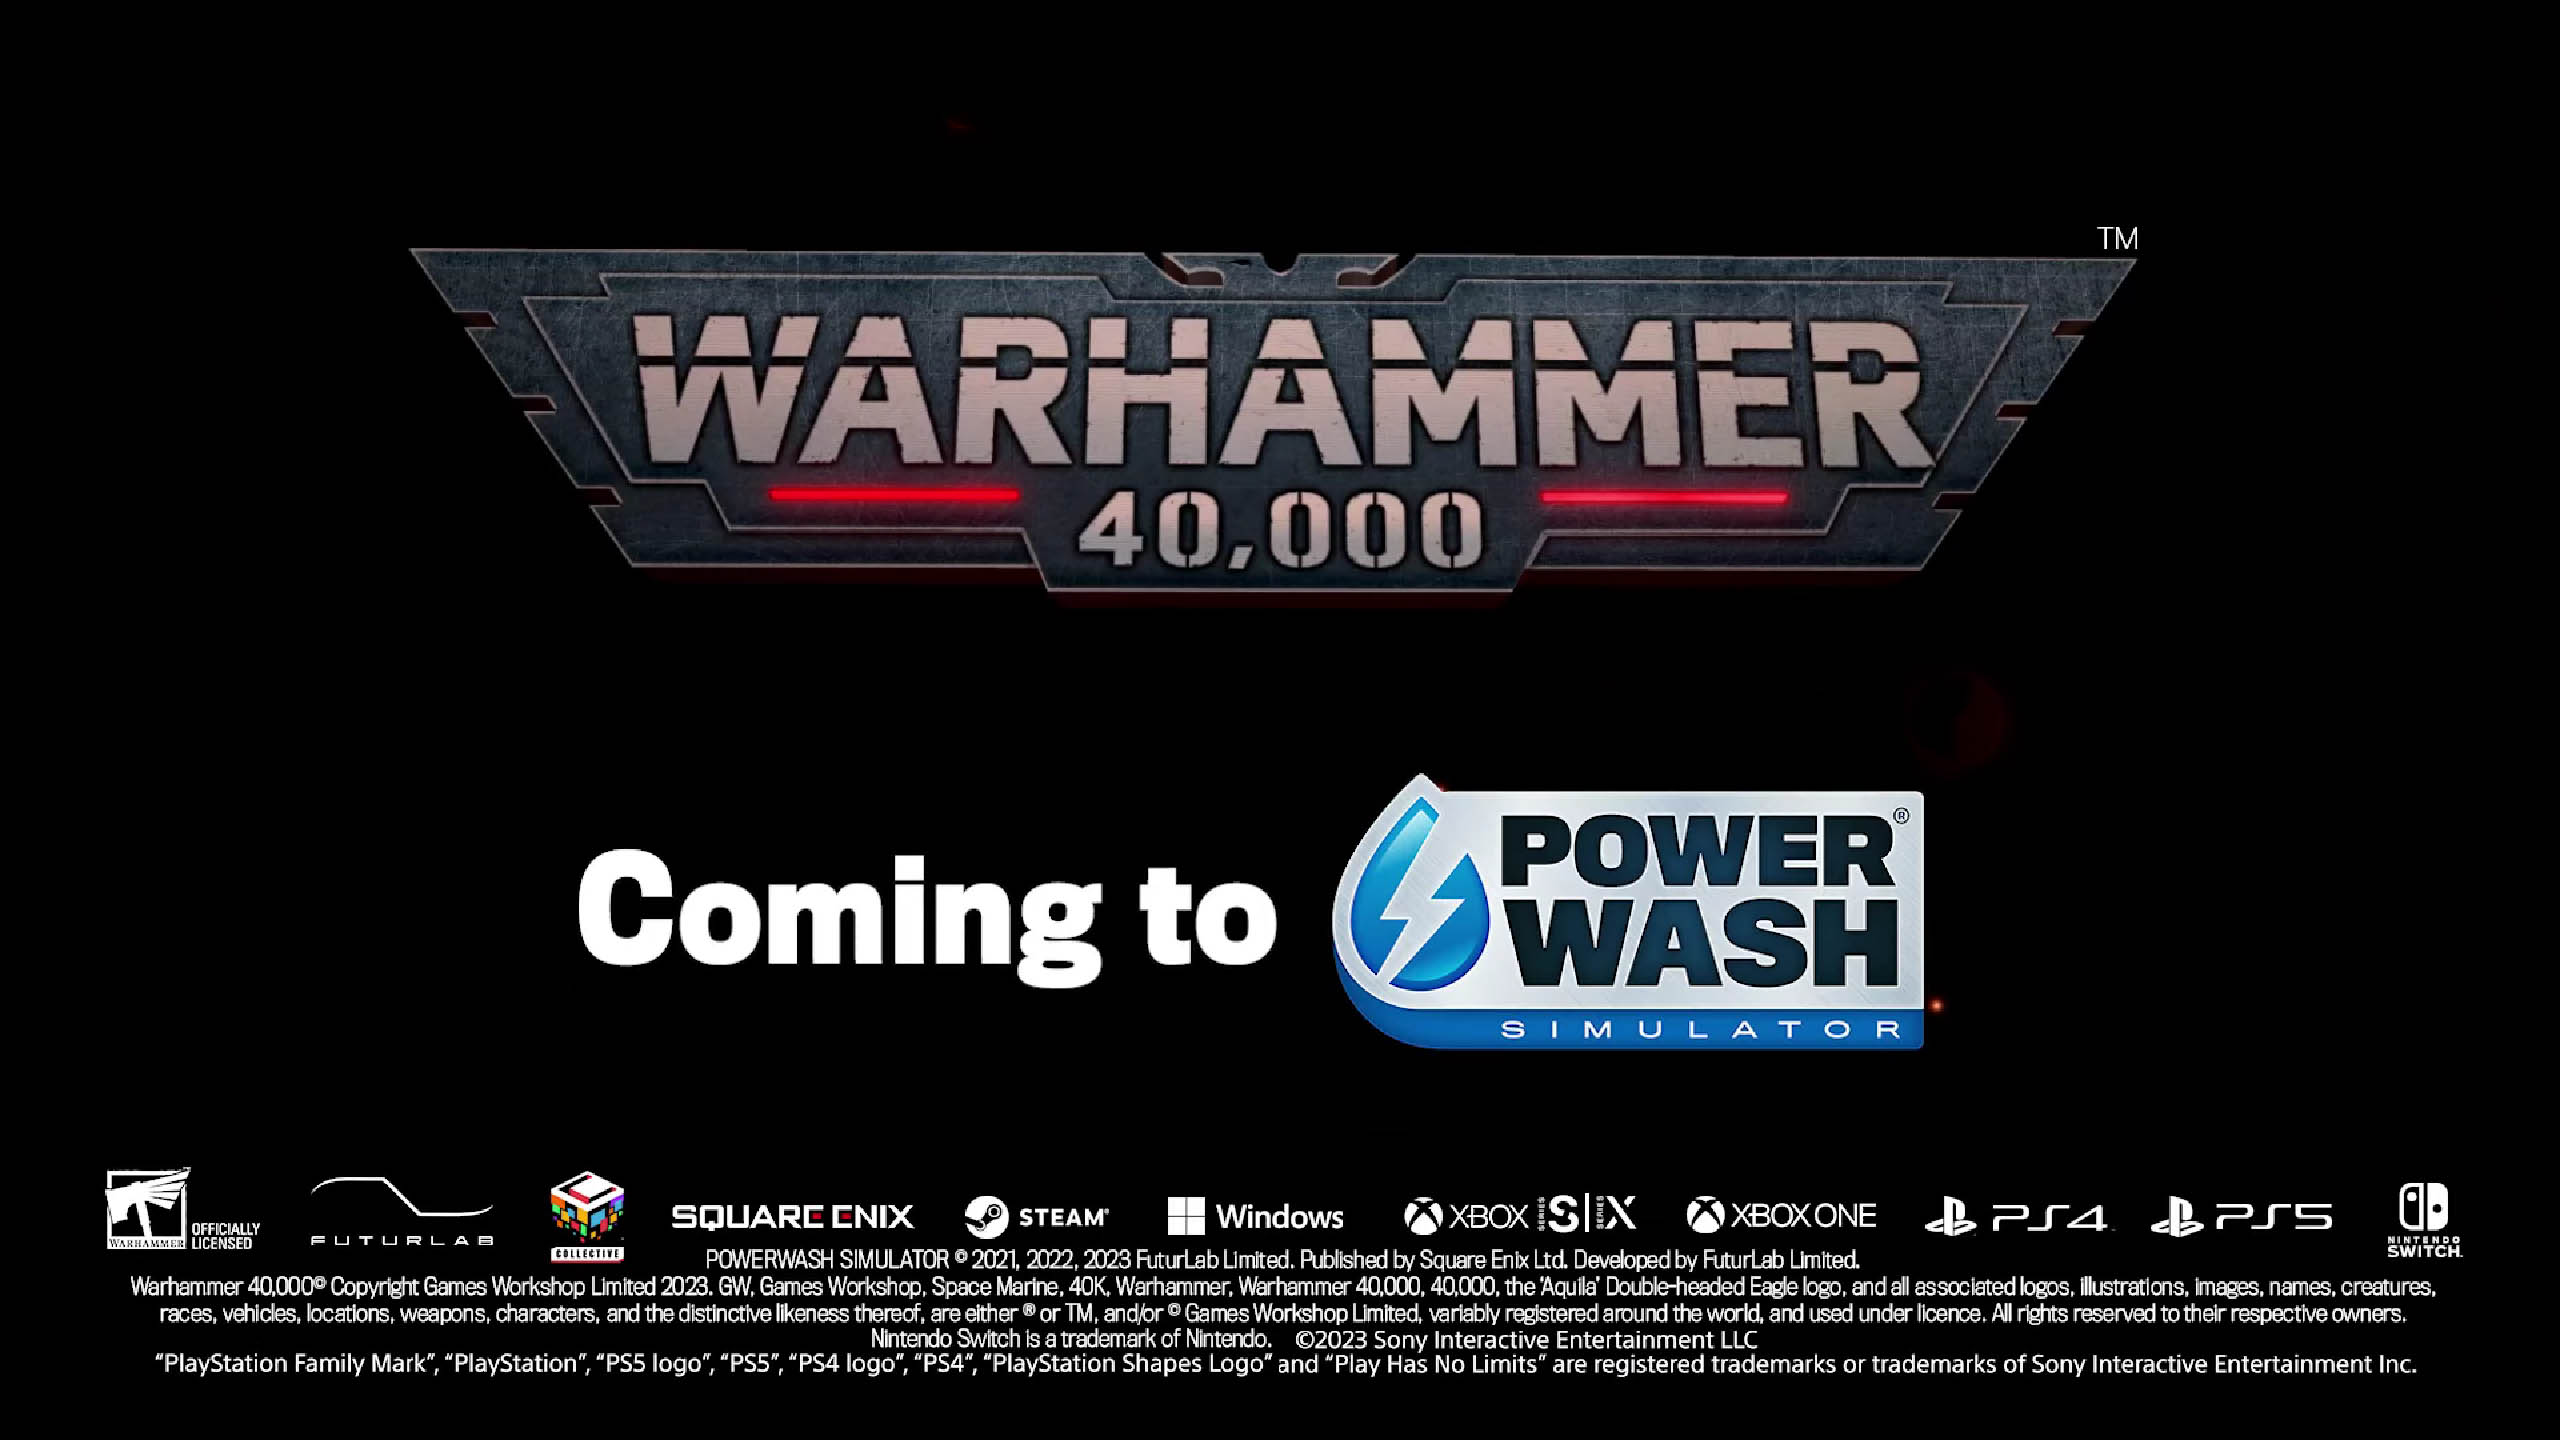 PowerWash Simulator gets new Warhammer collab DLC